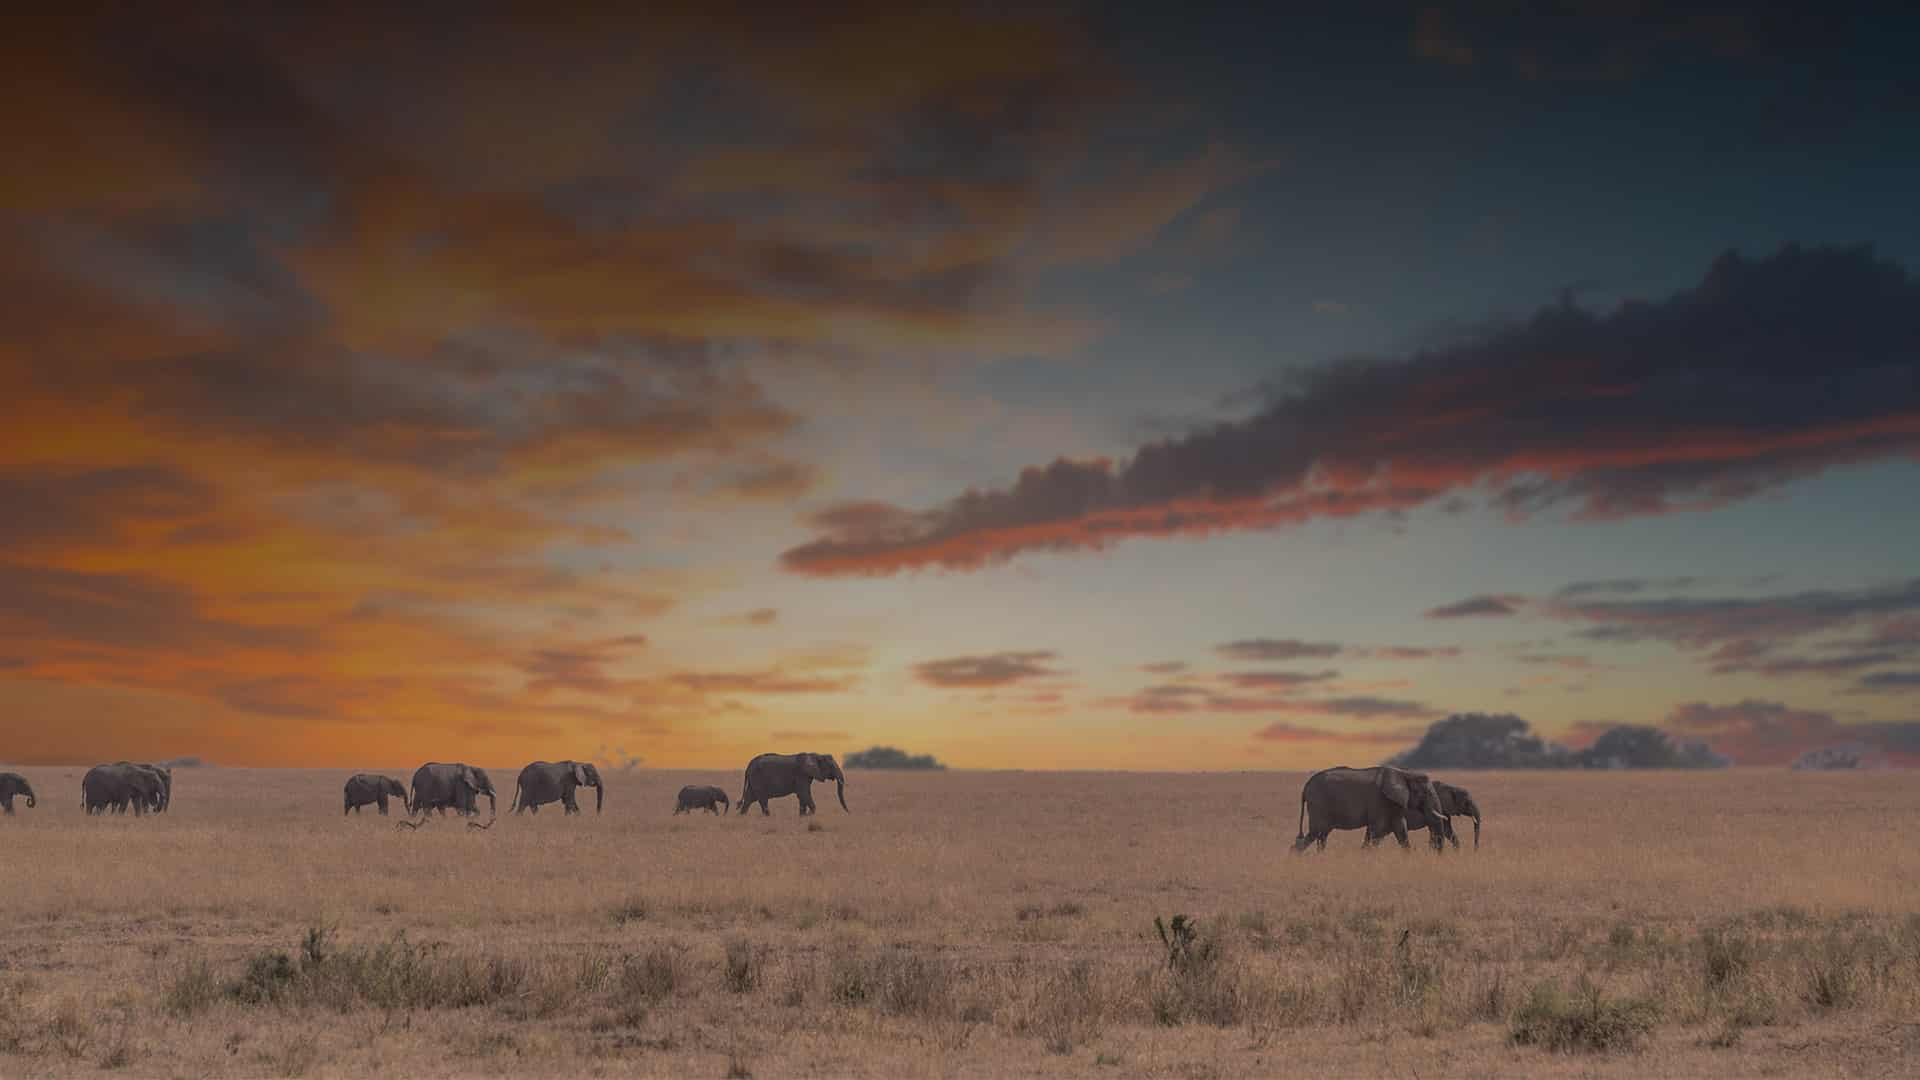 Elephant walking while on safari in Africa